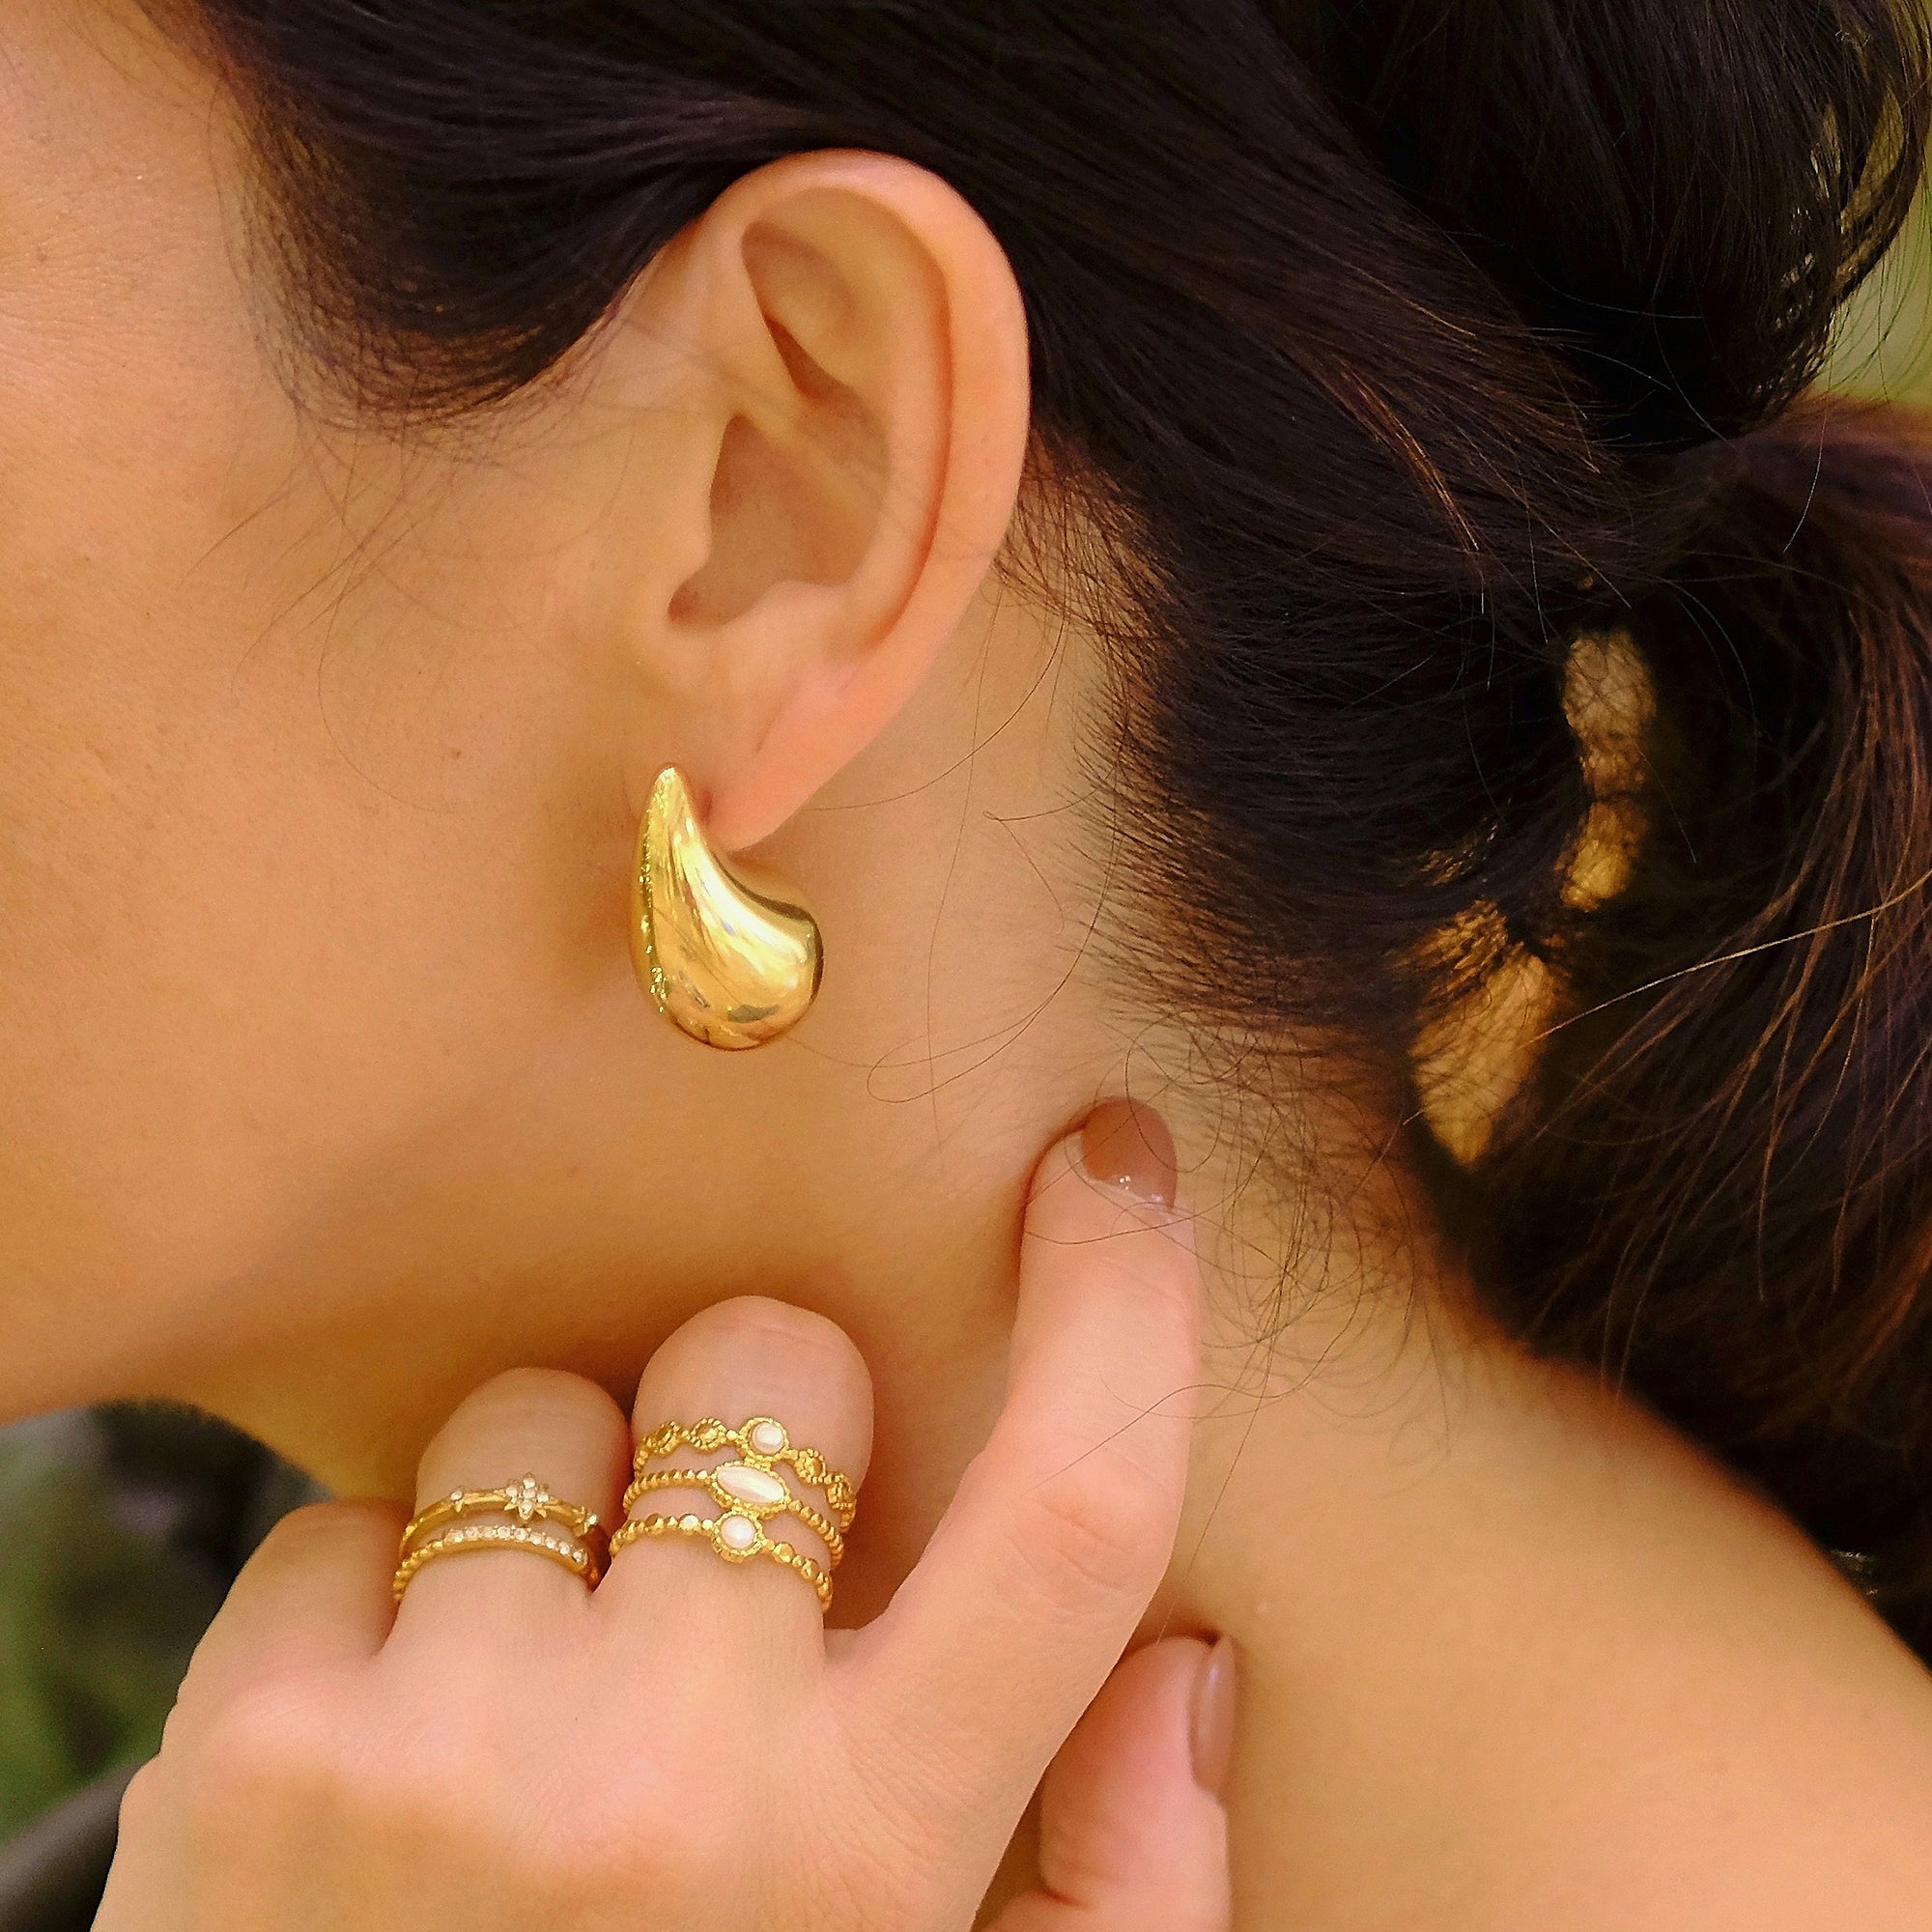 Buy Elegant Small Stone Drop Earrings Gold Plated Jewellery